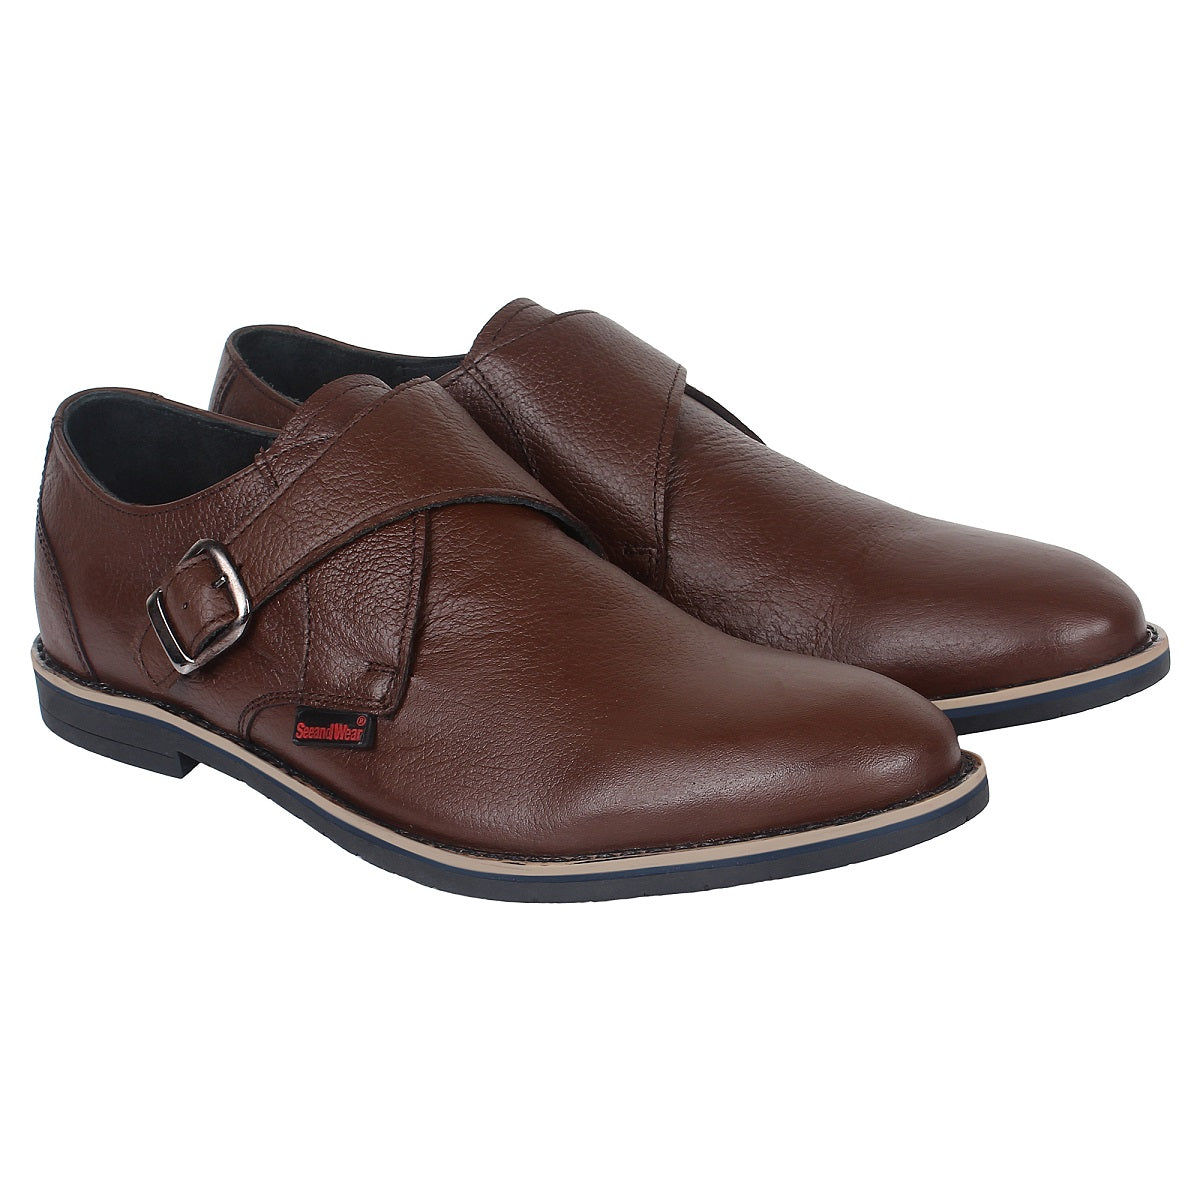 Brown Monk Strap Shoes -Defective